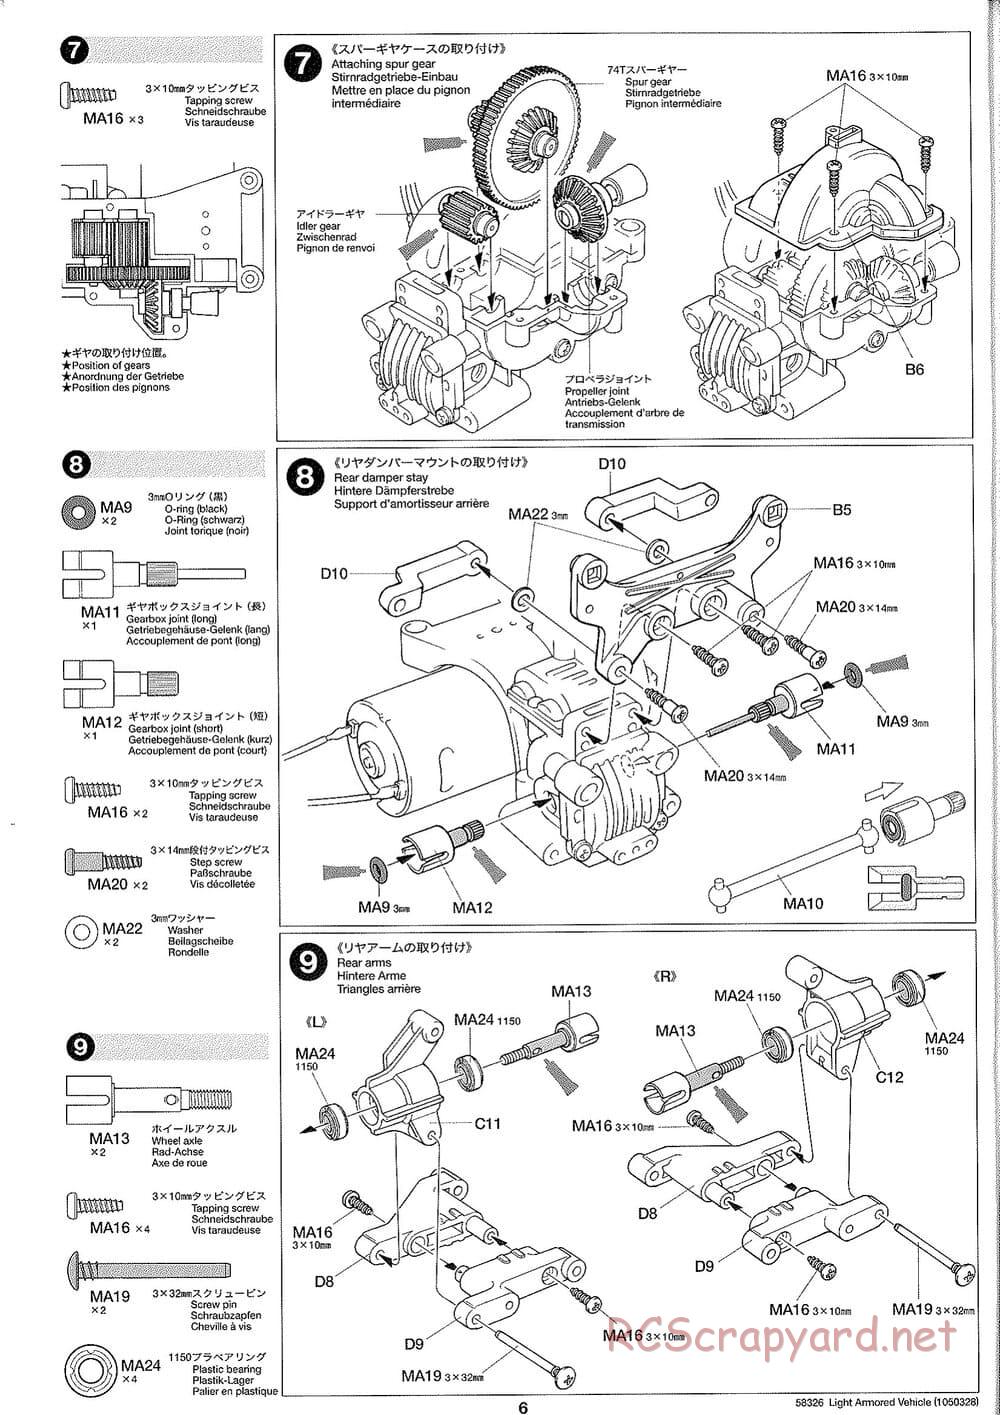 Tamiya - JGSDF Light Armored Vehicle - TA-01 Chassis - Manual - Page 6